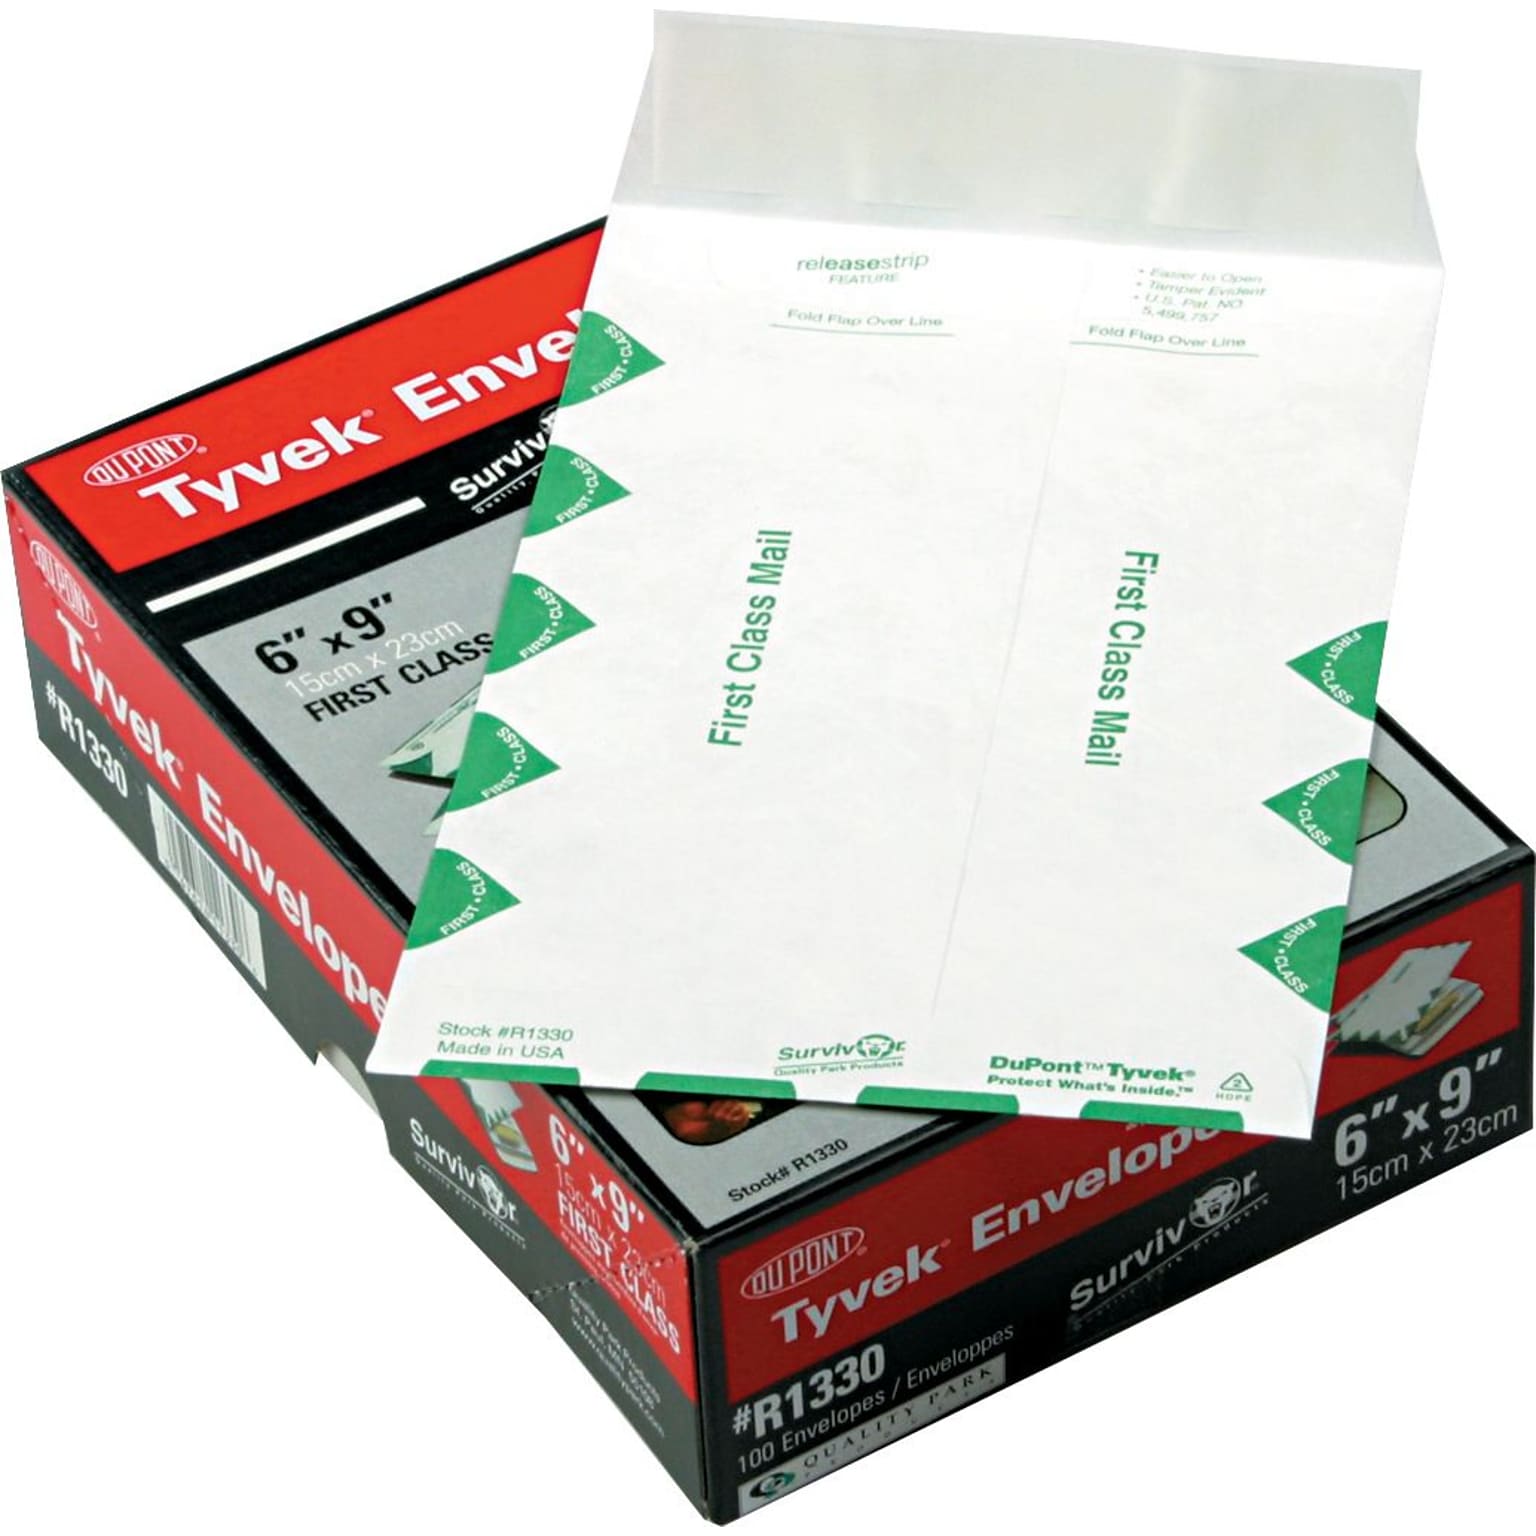 Quality Park First Class Tyvek Open End Catalog Envelopes, 6 x 9, Green/White, 100/Box (R1330)